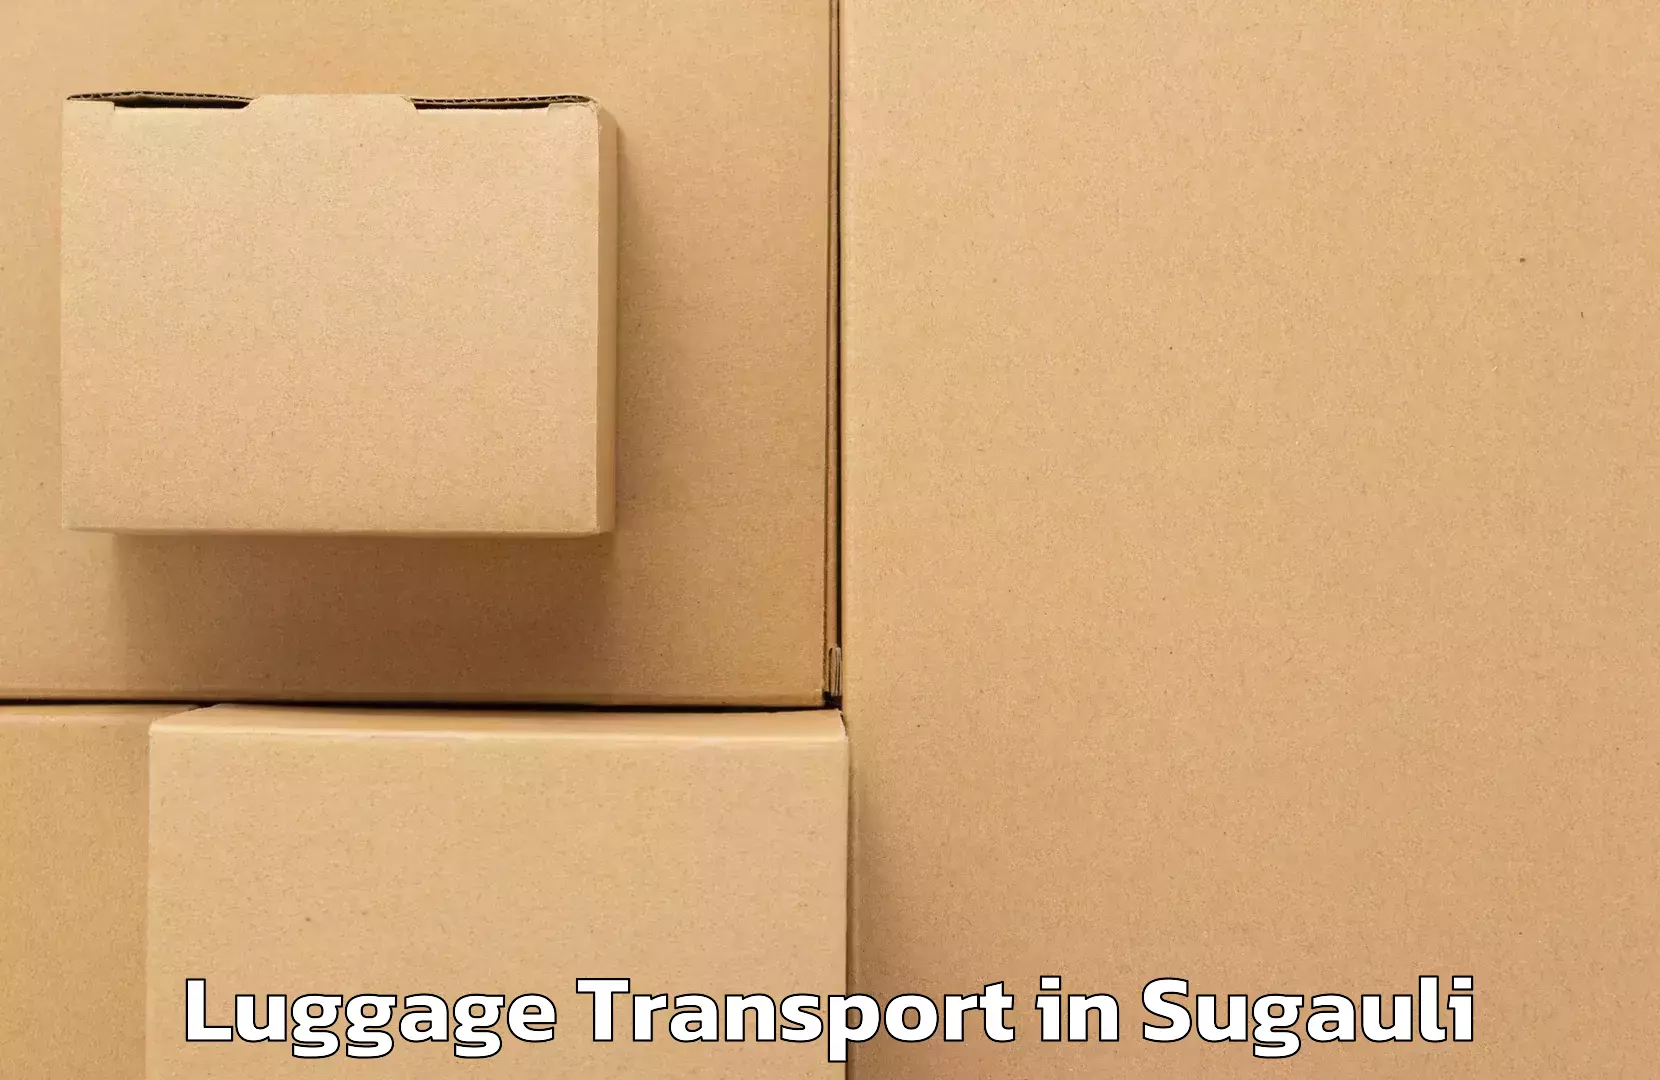 Baggage shipping experience in Sugauli